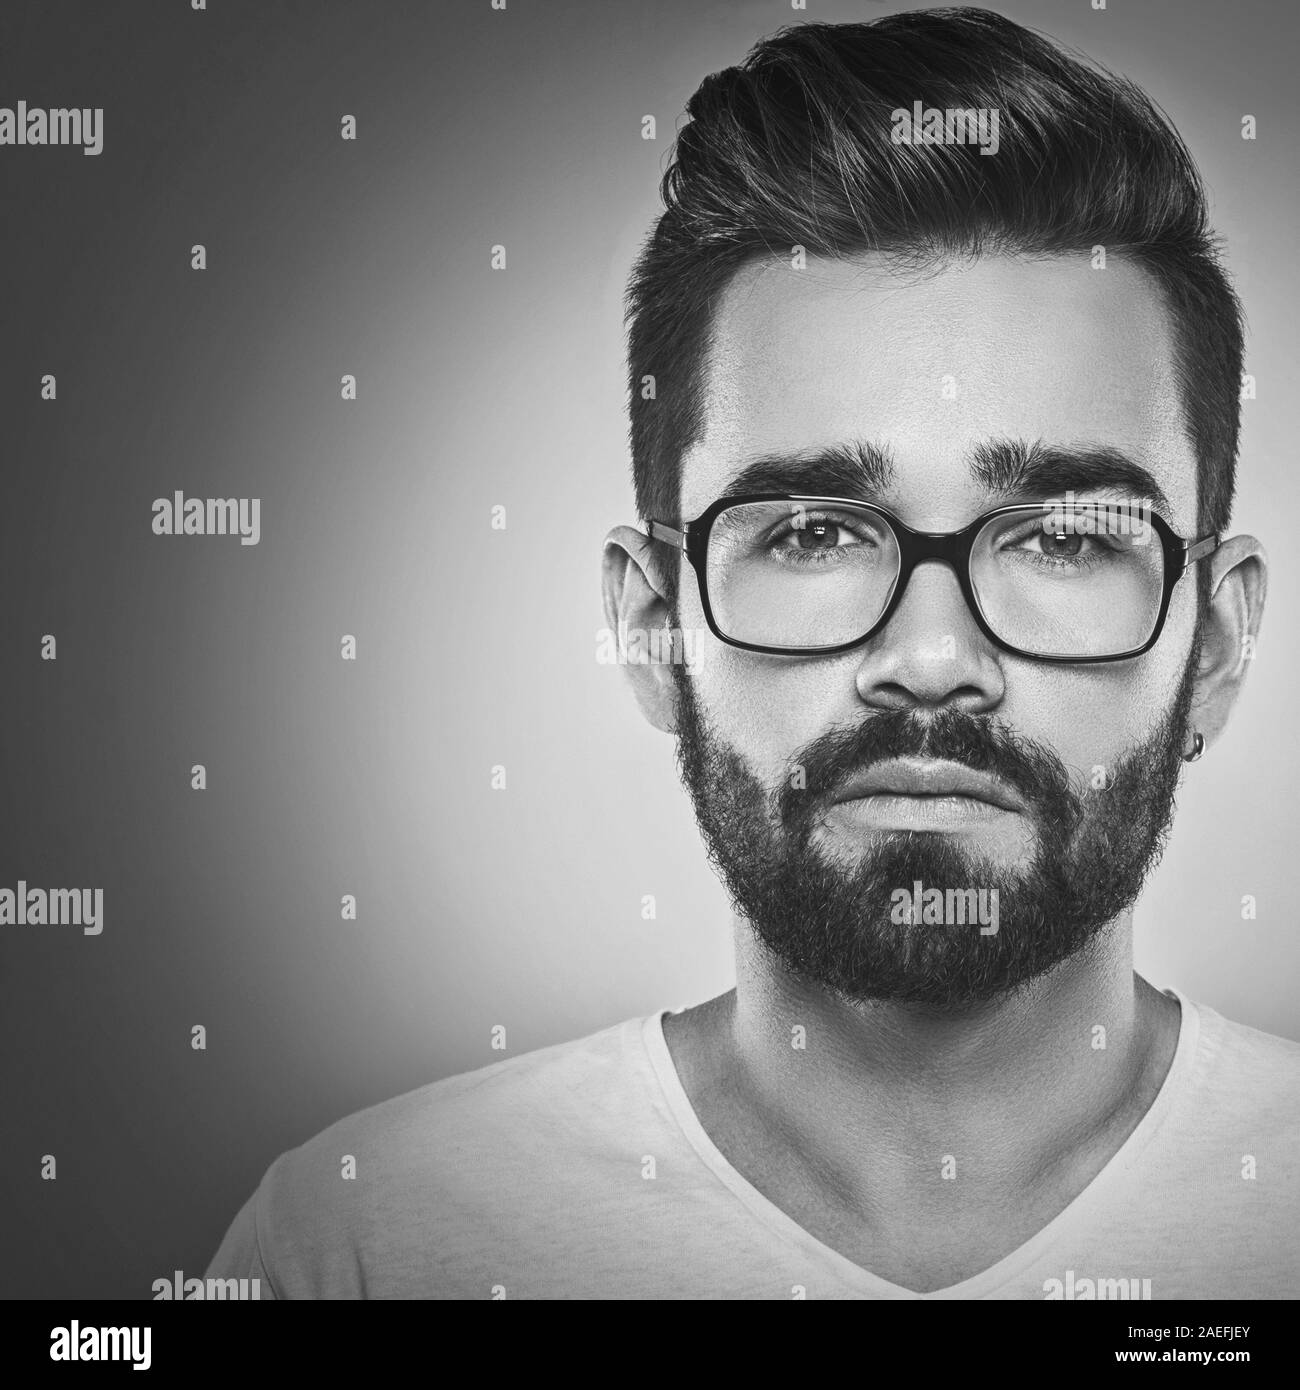 Bearded man in eyeglasses Stock Photo